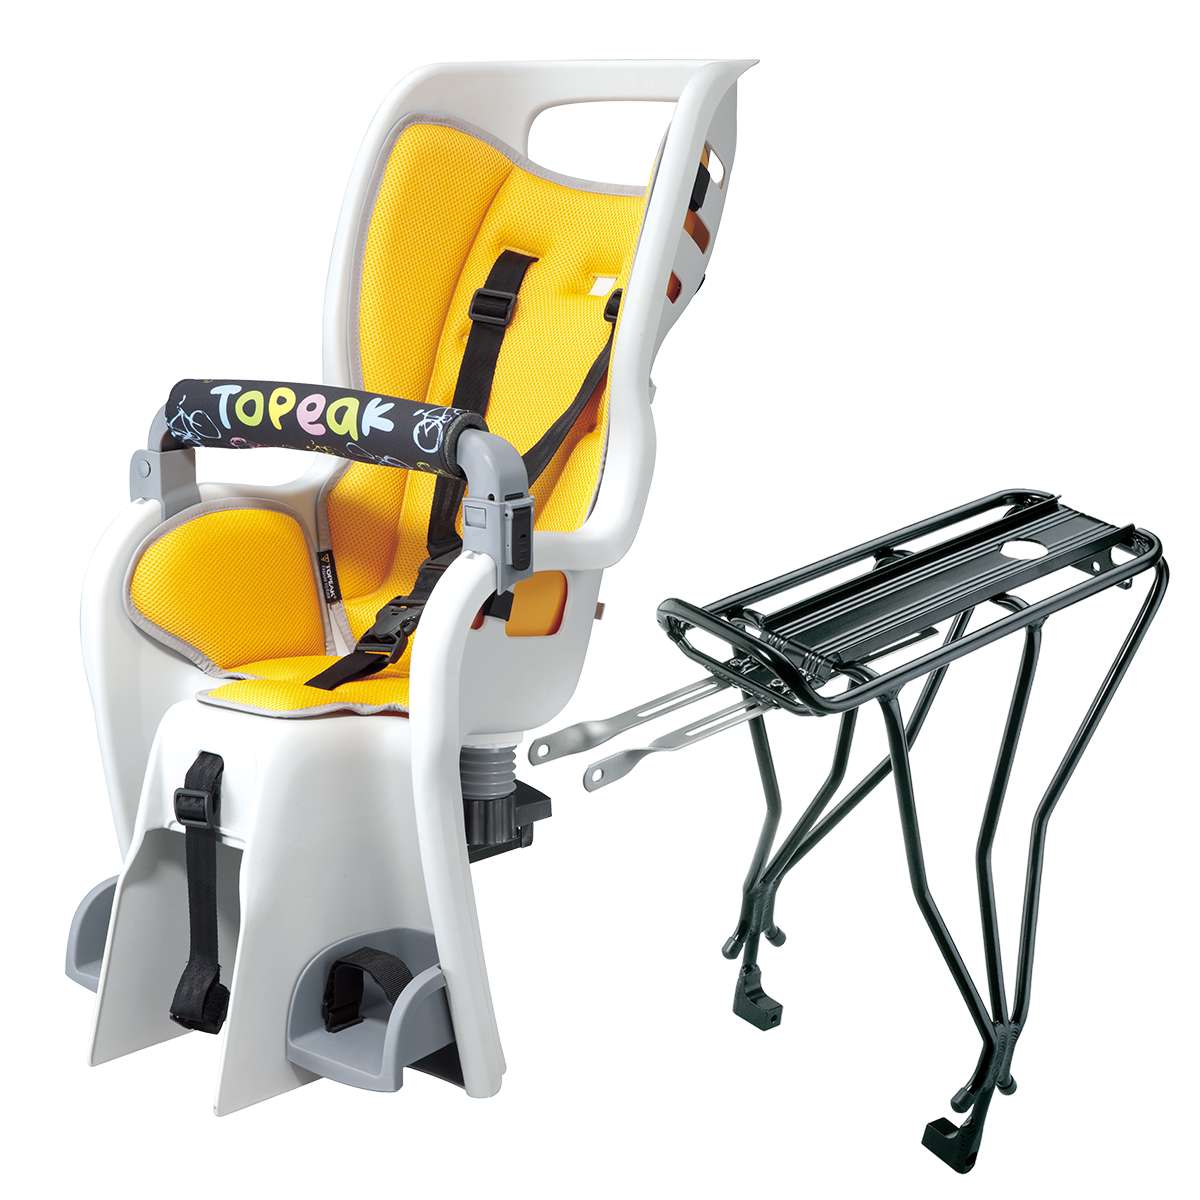 TOPEAK BABYSEAT II嬰兒坐椅跟碟掣碼尾架-TCS2205 / TOPEAK BABYSEAT II W/DISC MOUNT RACK-TCS2205